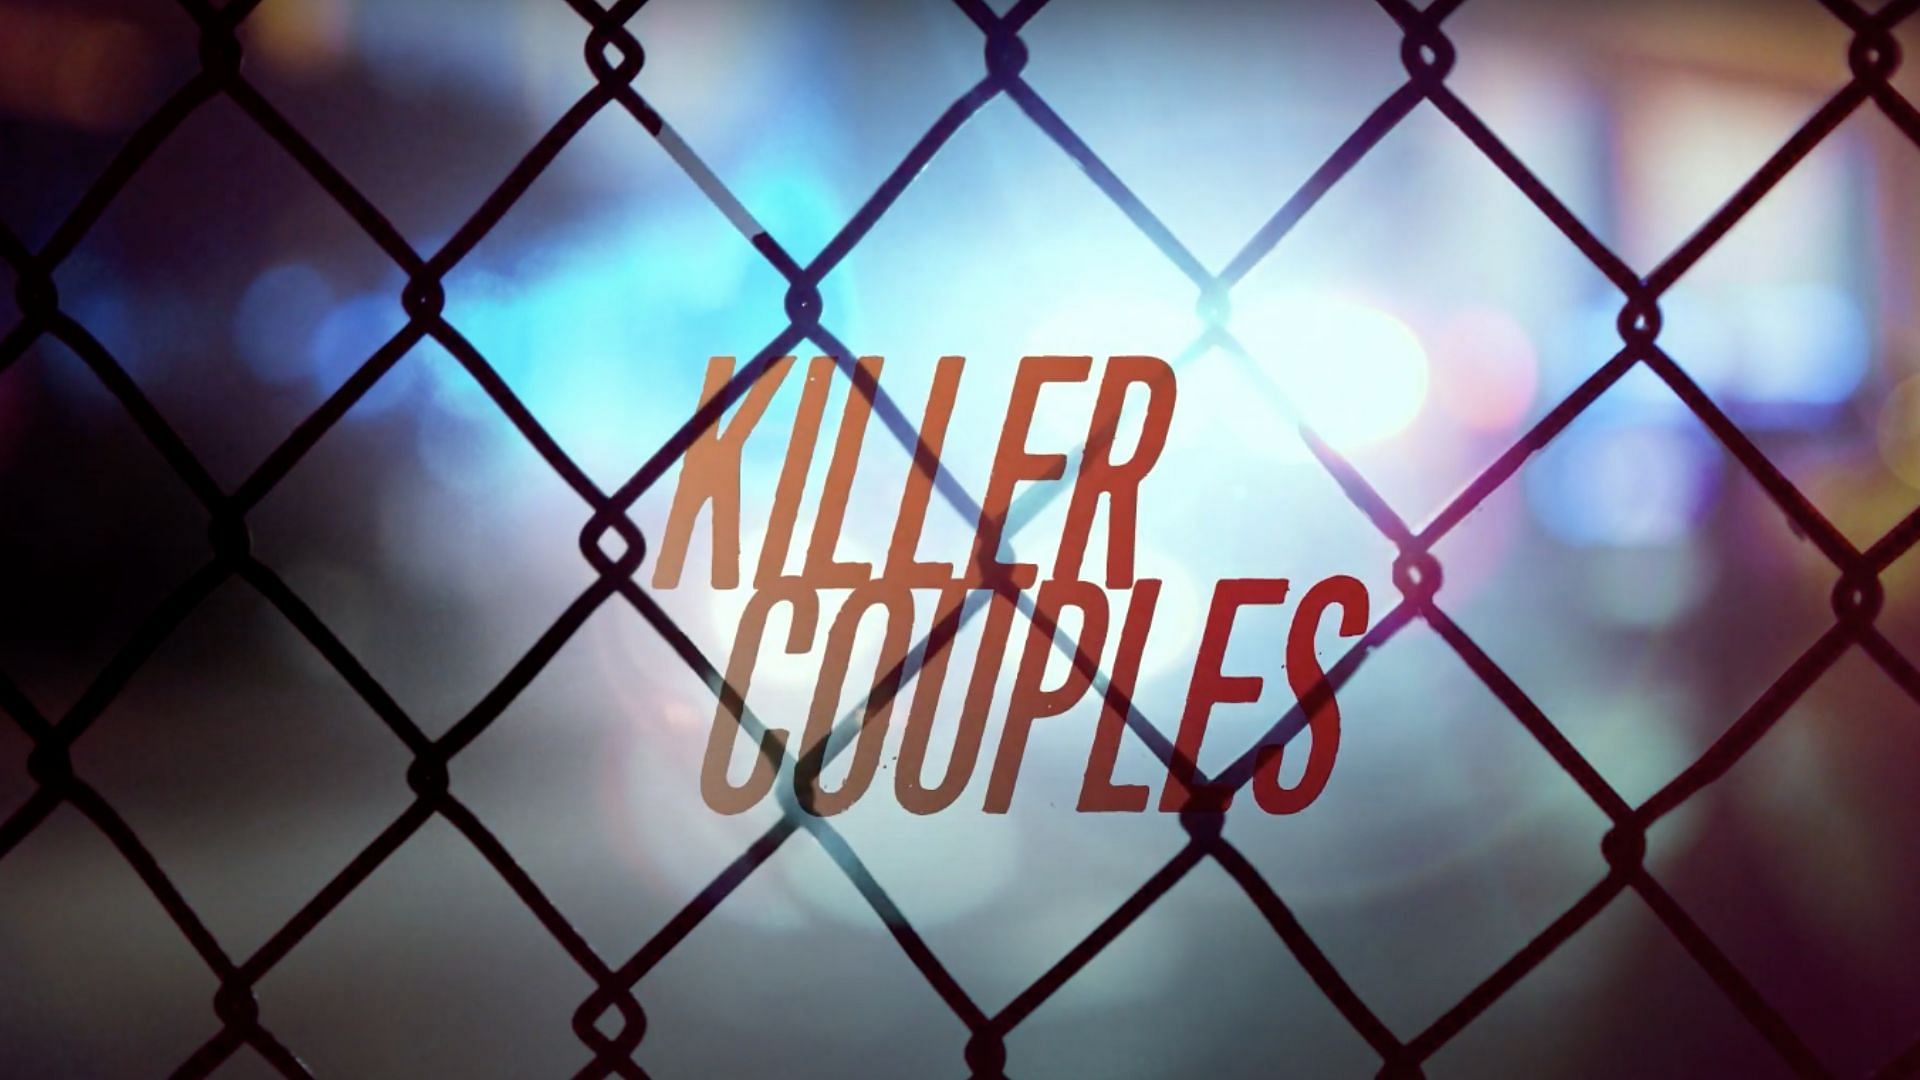 Snapped: Killer Couples (Image via Oxygen/ YouTube)